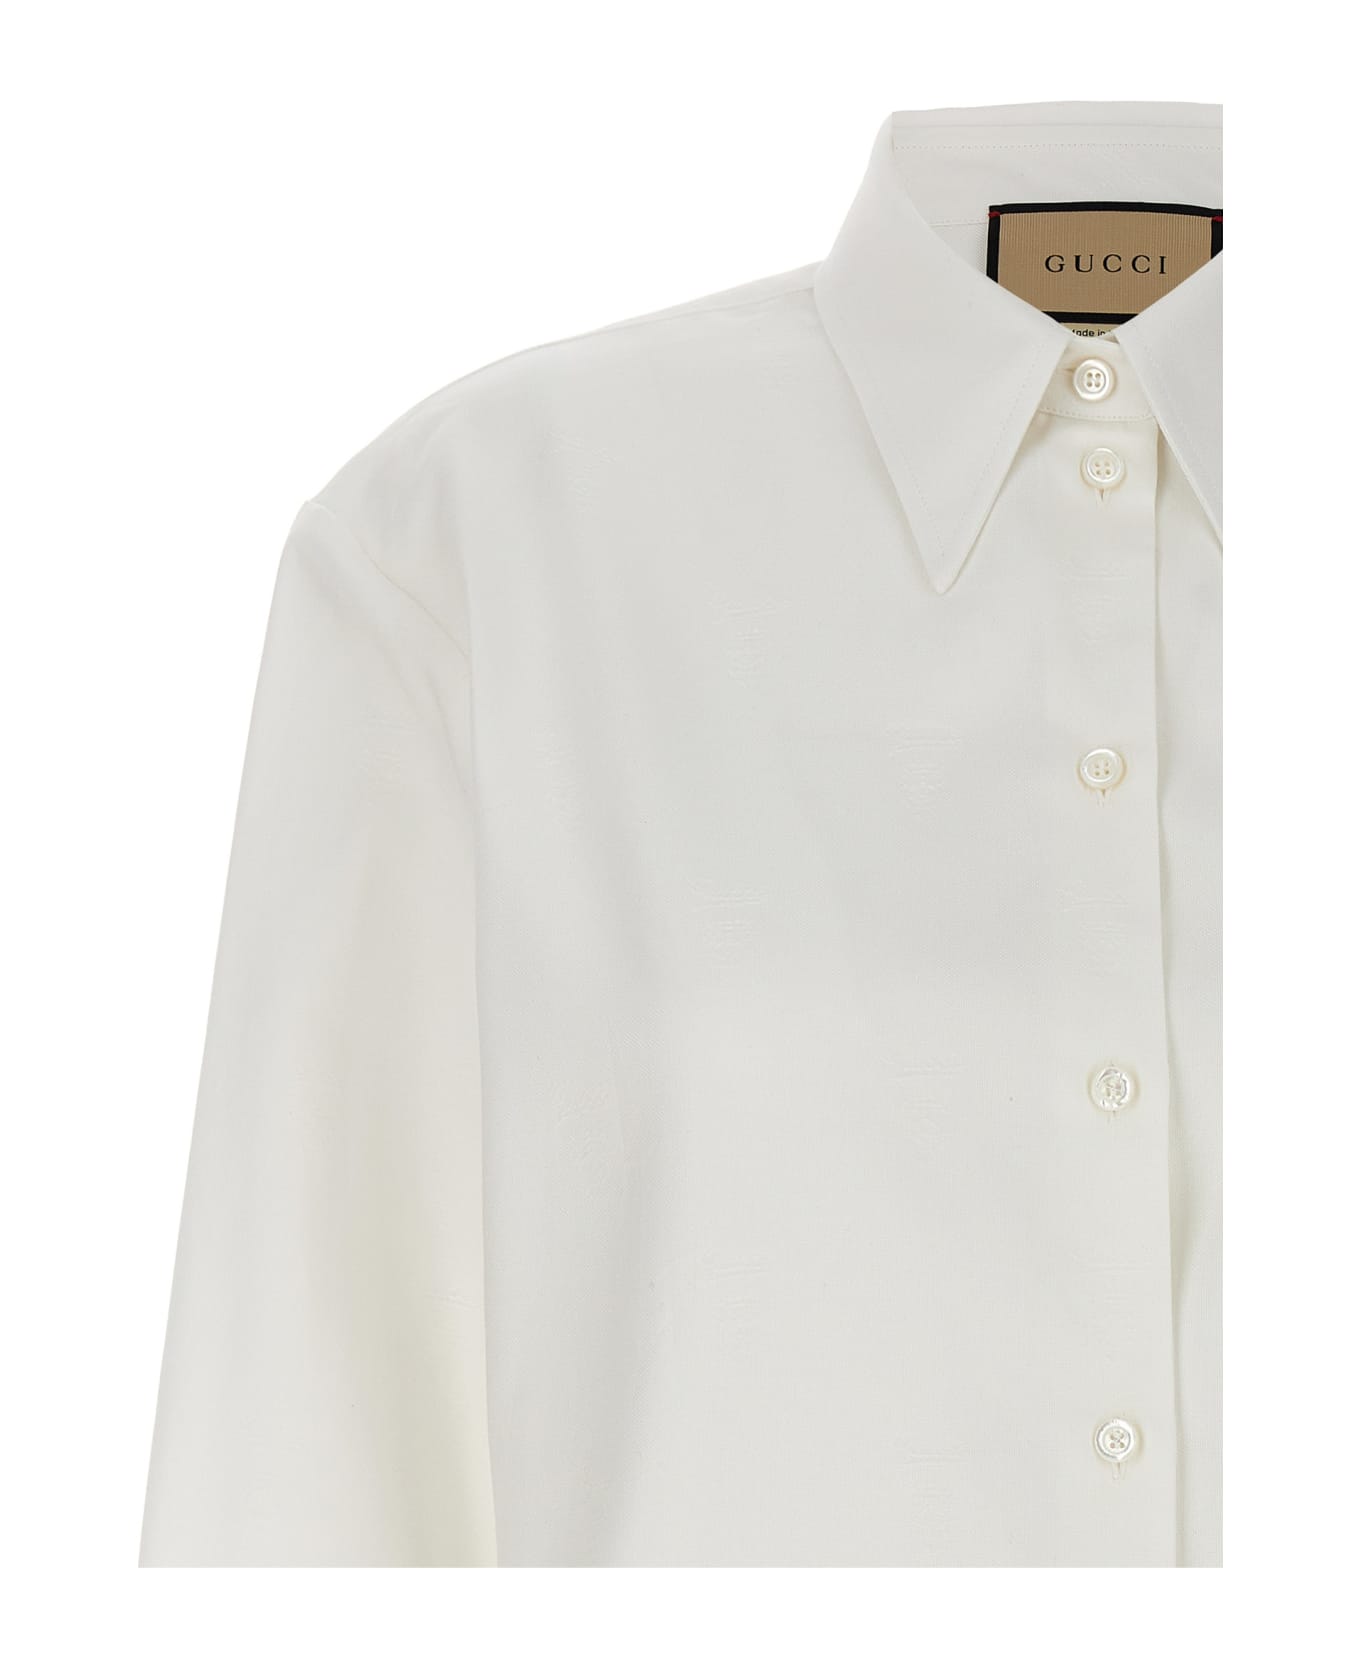 Gucci Oxford Shirt - White